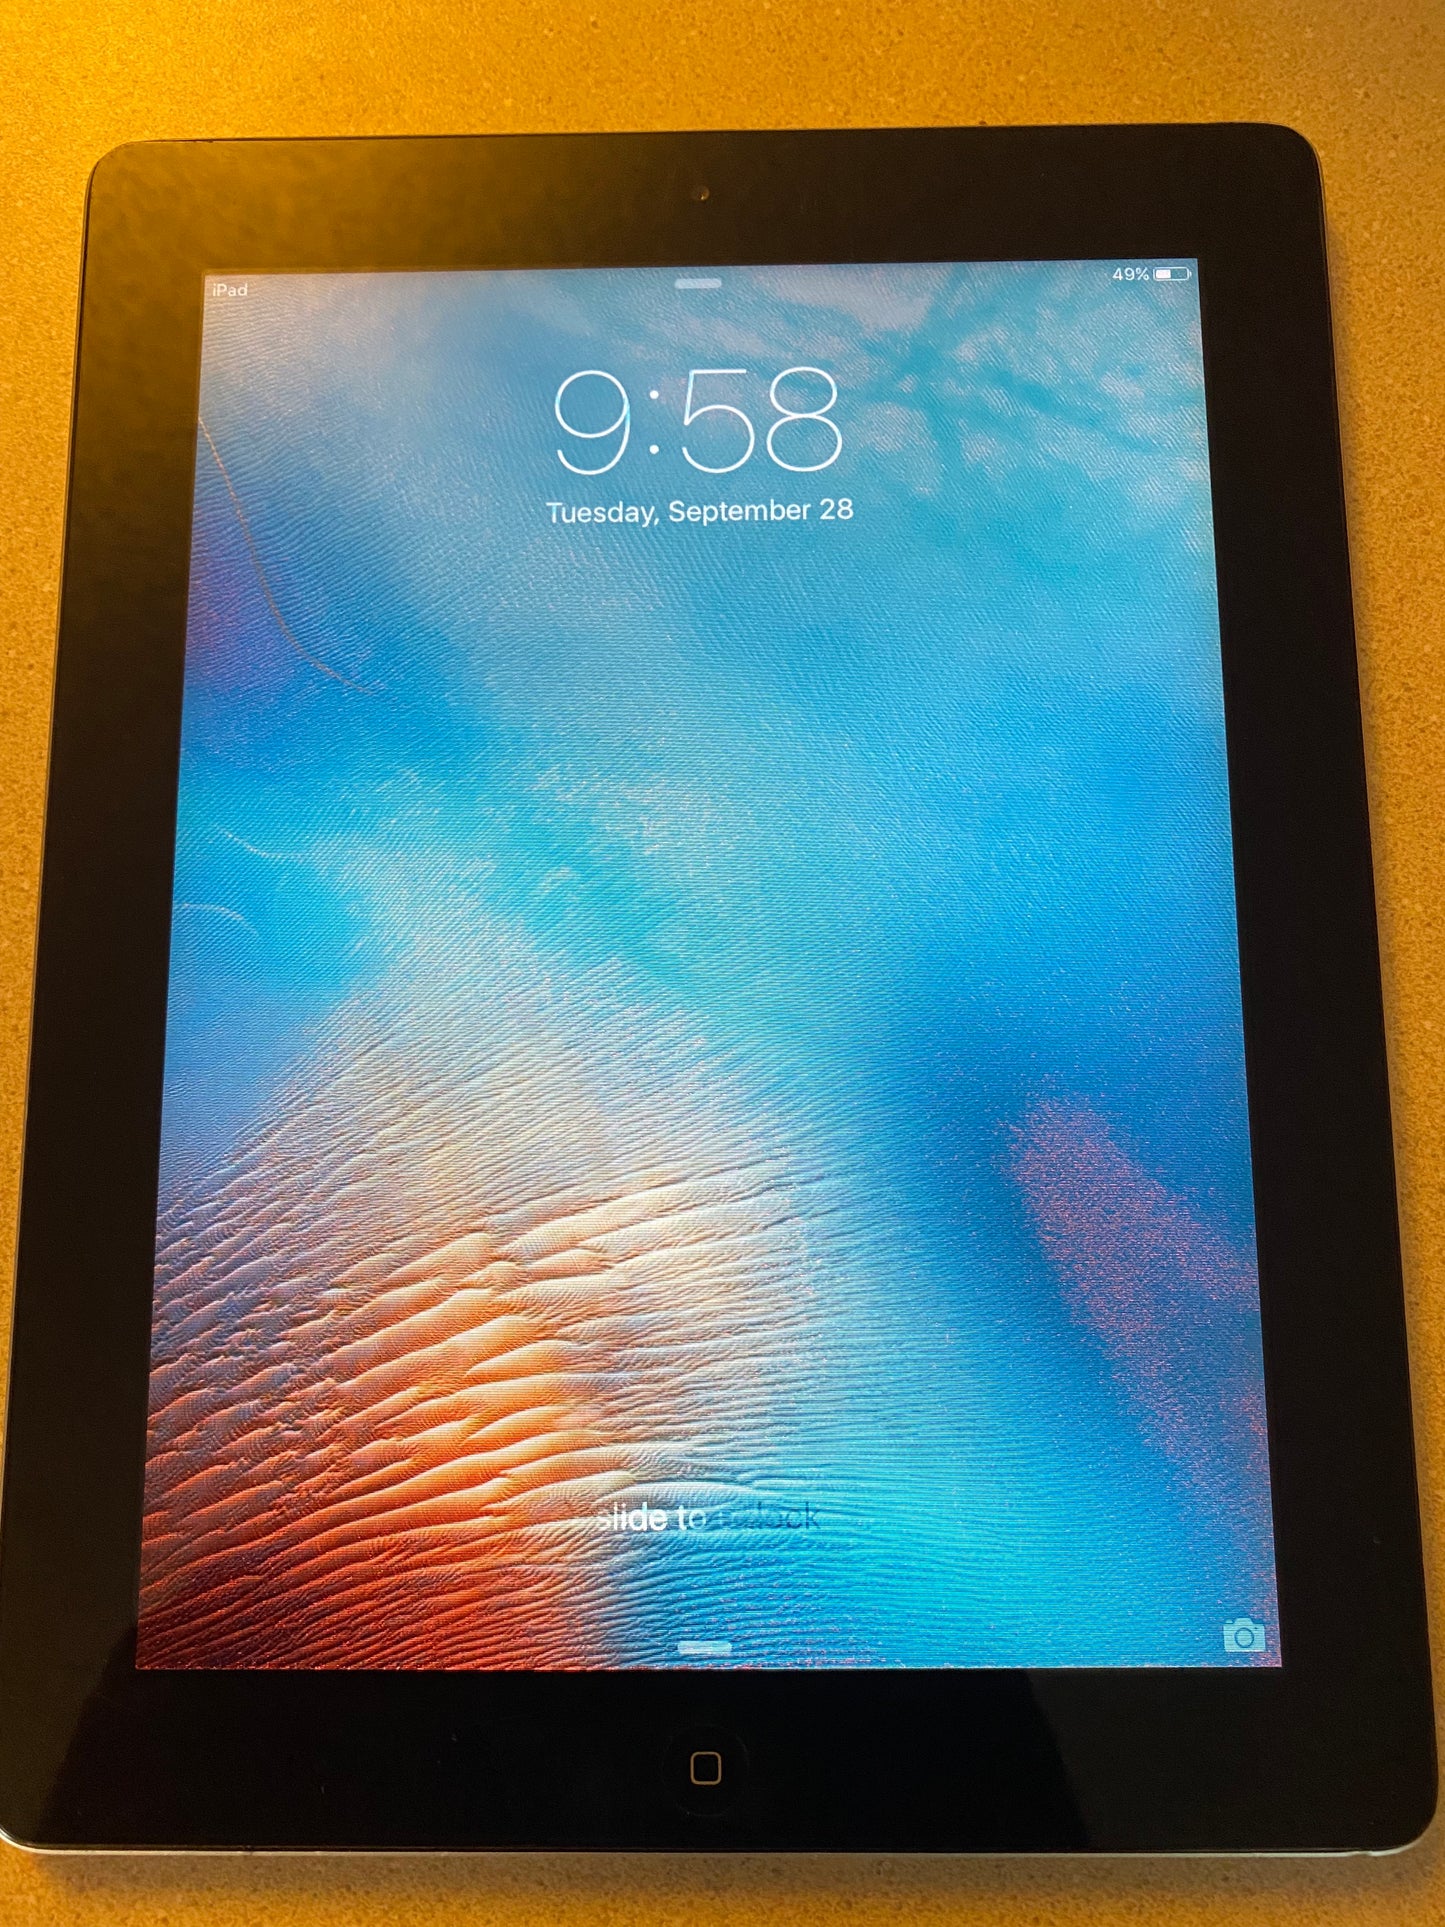 Apple iPad 2 - 16GB, Wi-Fi 9.7" Black A1395 Working Fuzzy Video Unlocked "AS-IS"